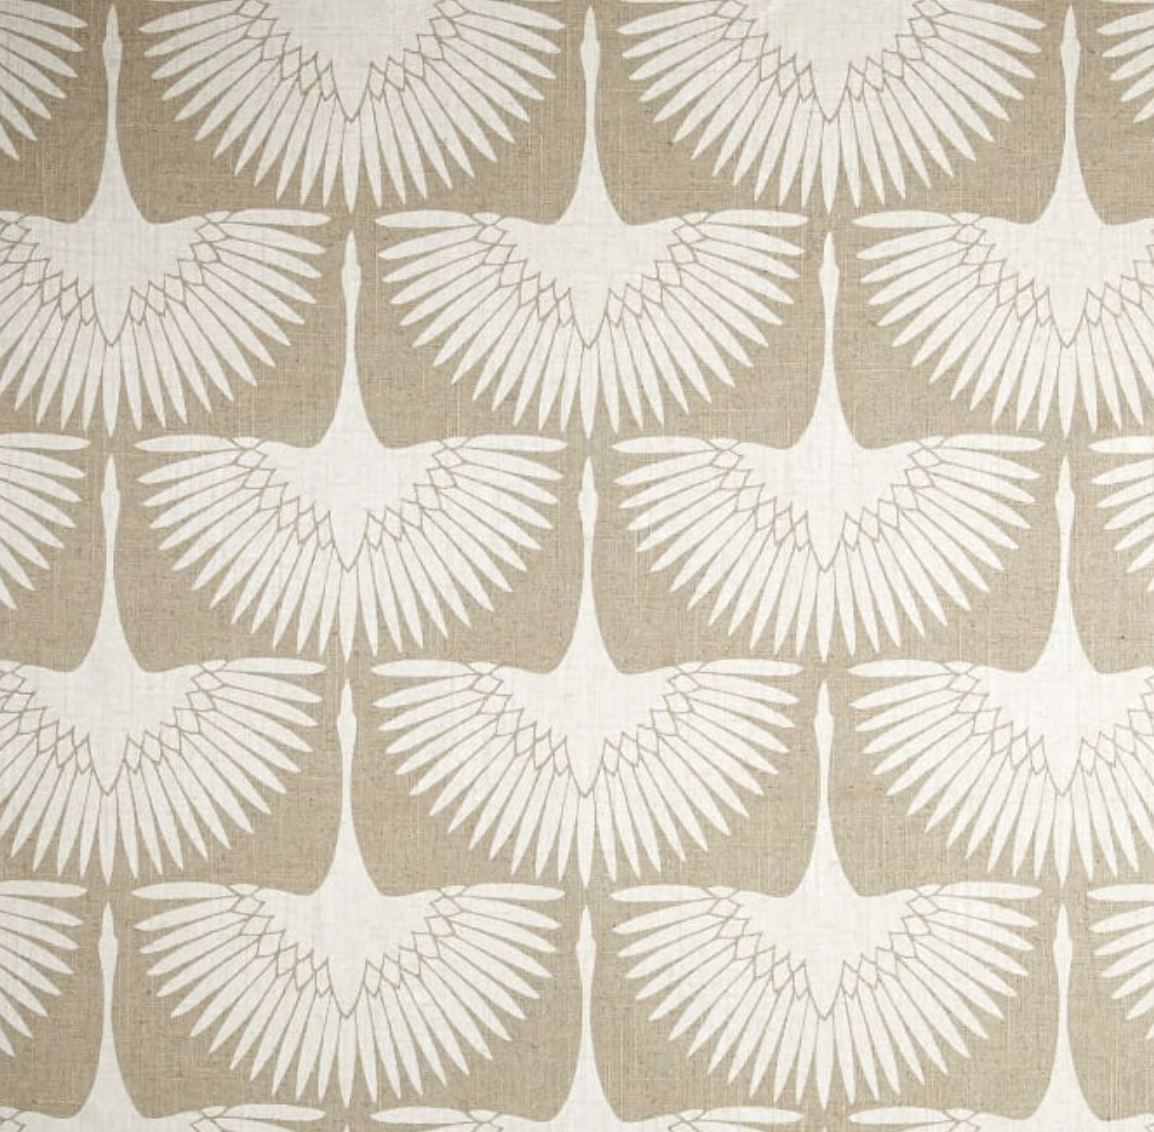 Genevieve Gorder fabric curtains